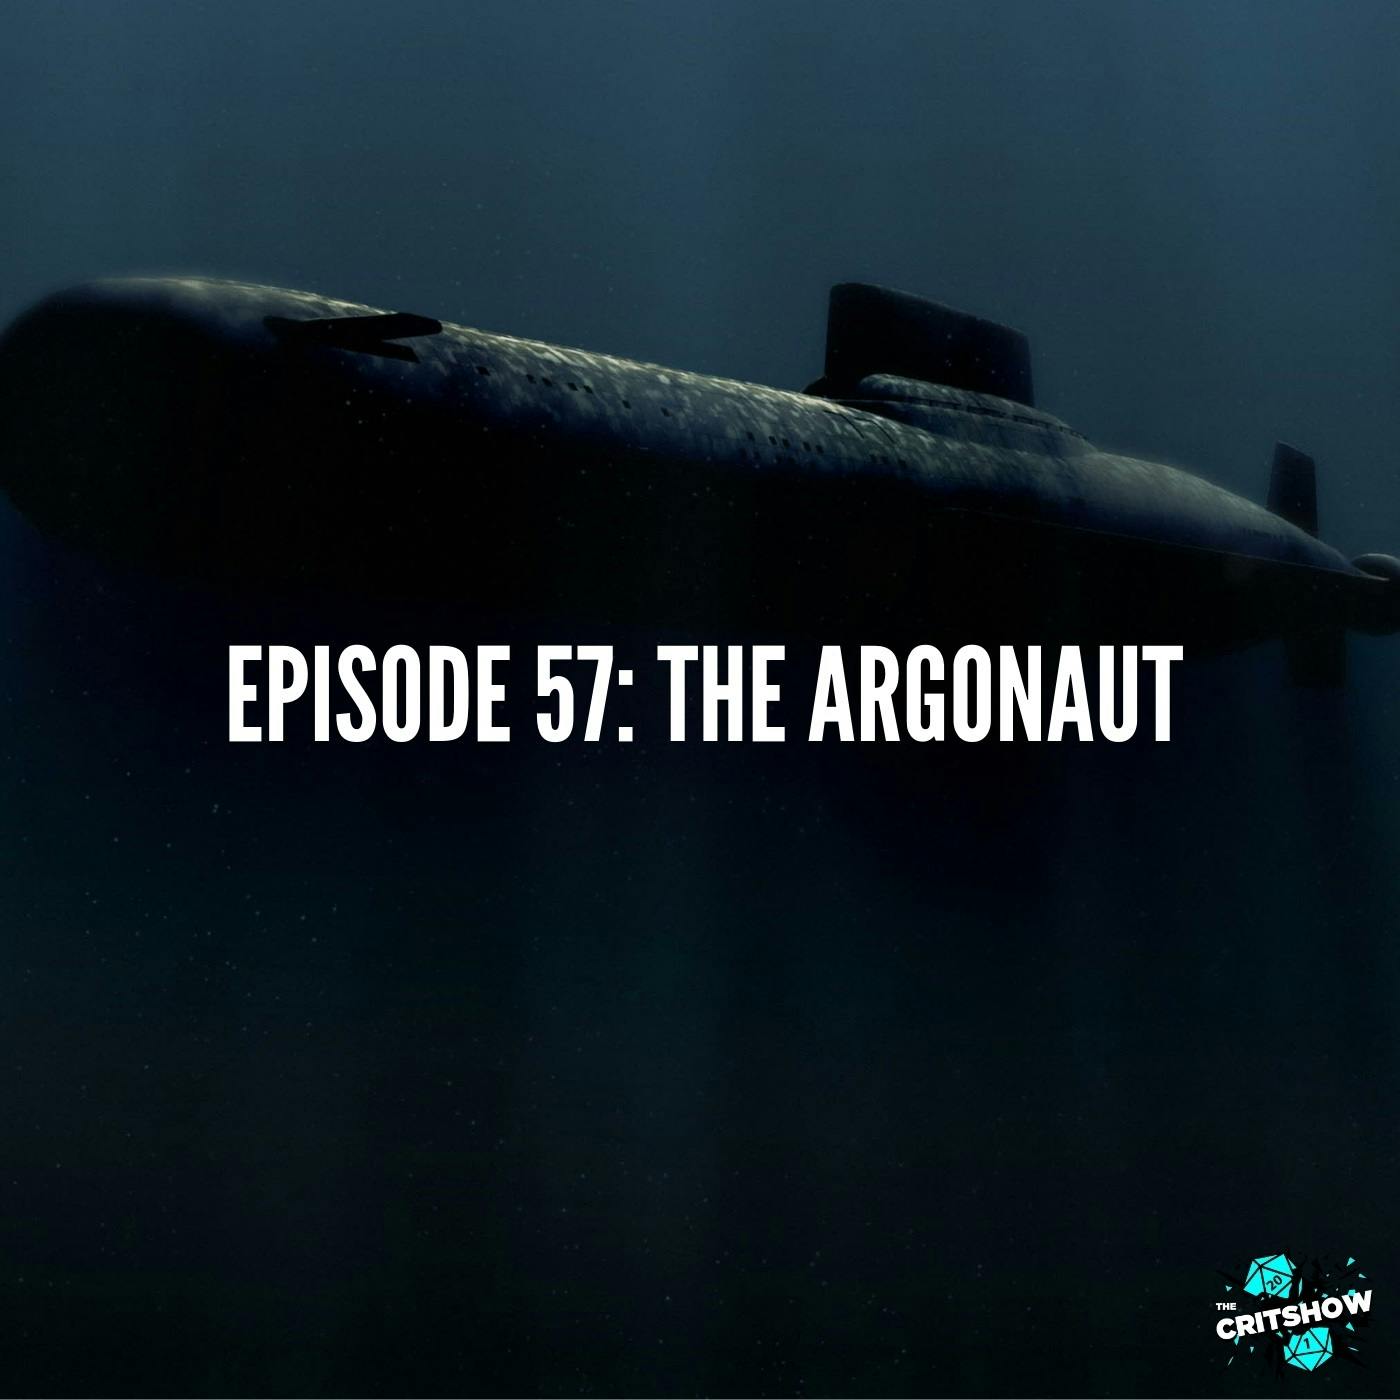 The Argonaut (S1, E57)